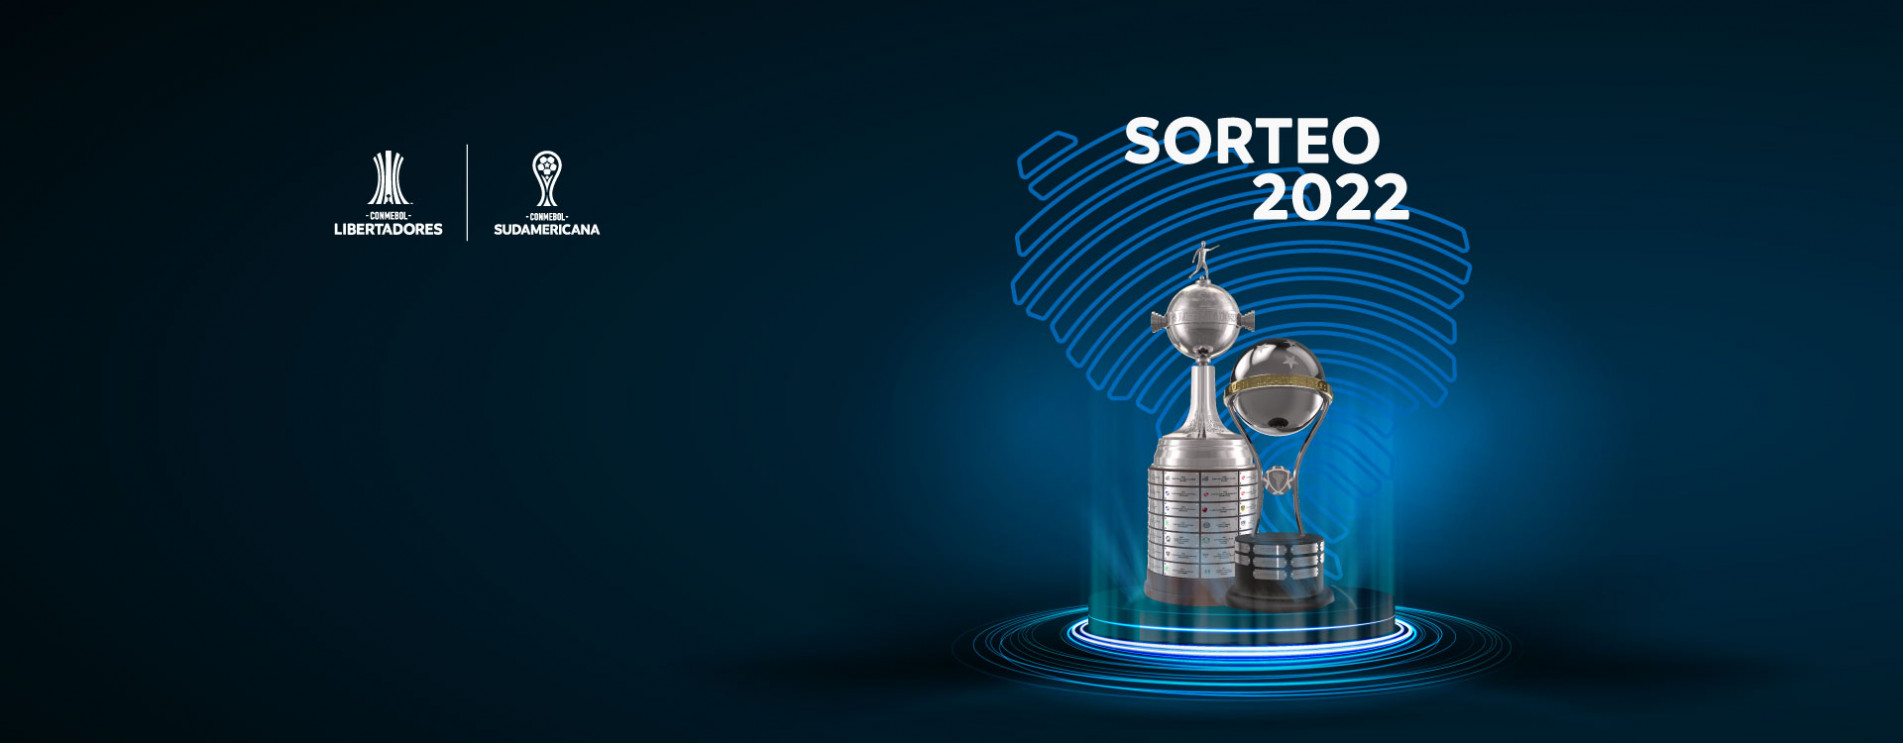 Sorteio dos grupos da CONMEBOL Libertadores e CONMEBOL Sudamericana 2022